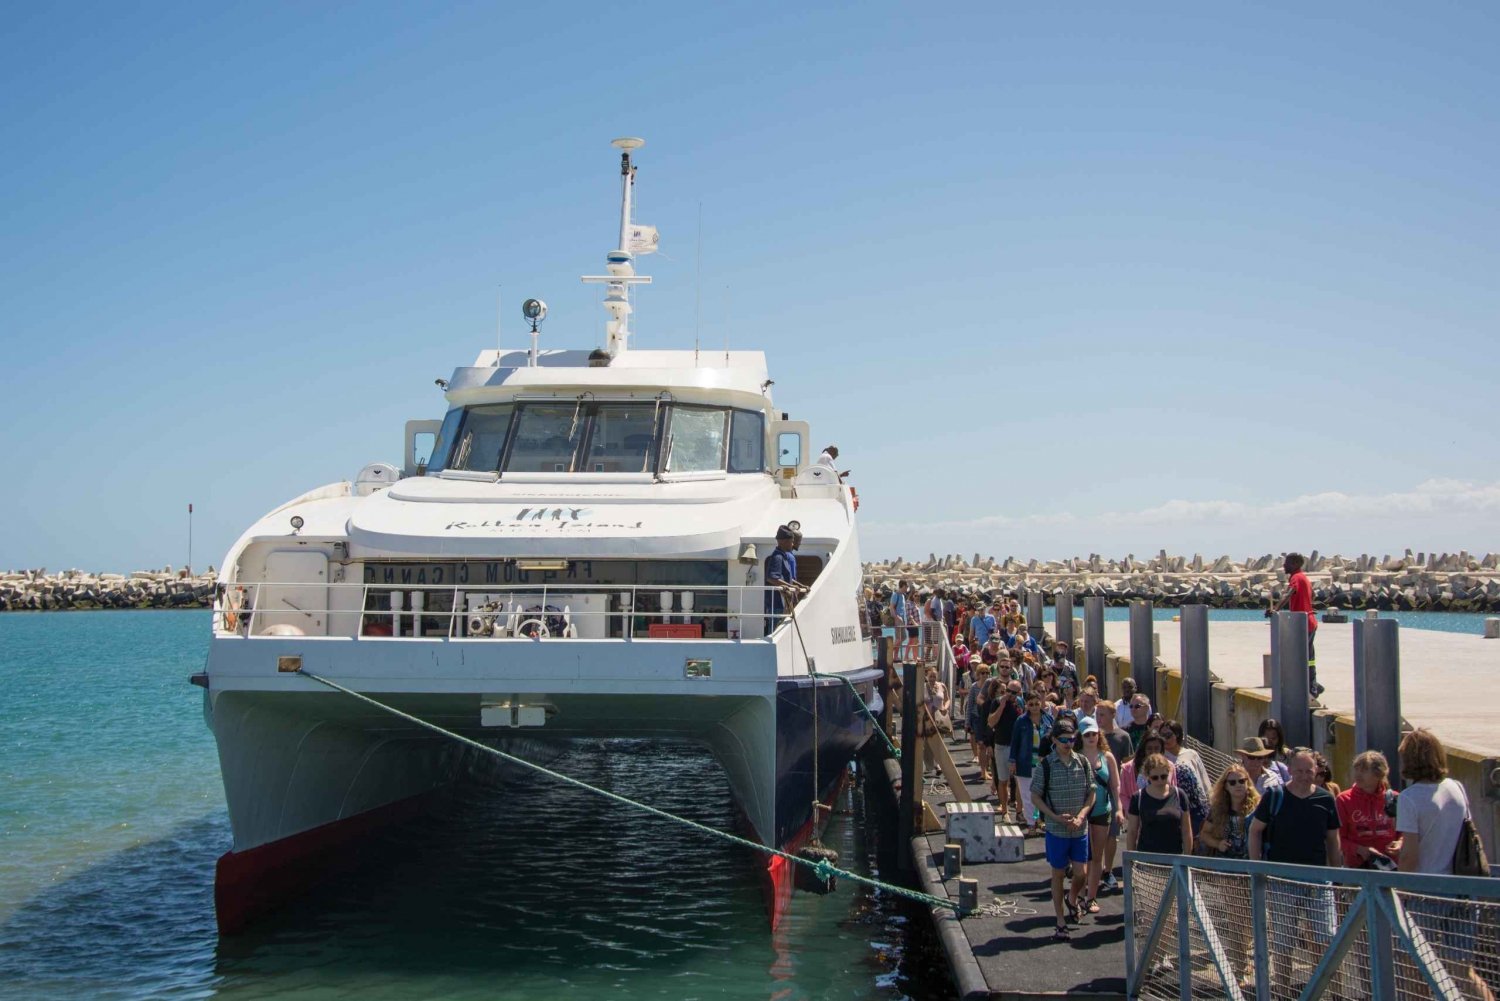 Le Cap : Robben Island Boat Trip & Museum Tour Ticket